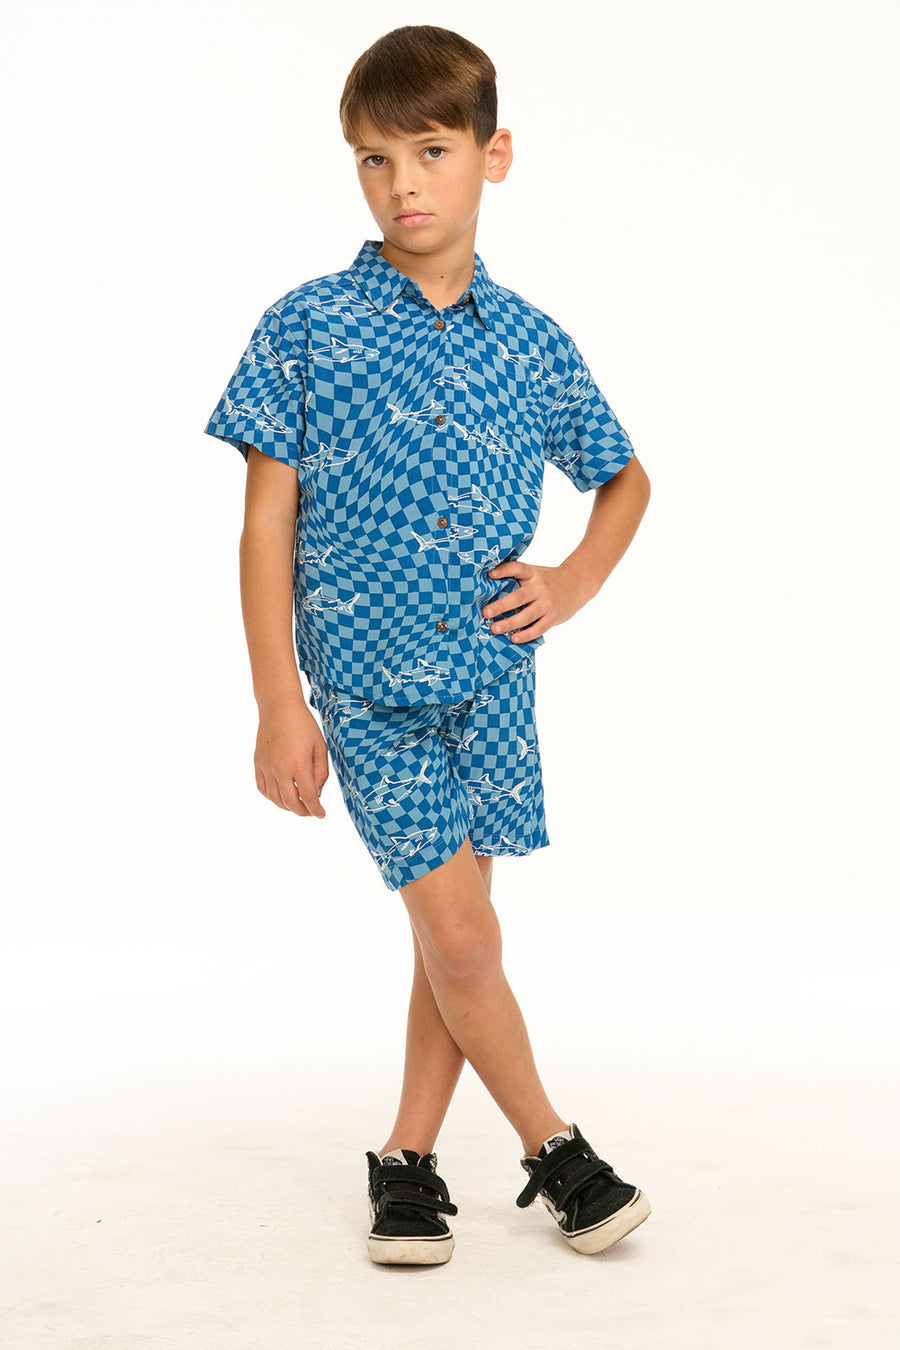 Boy's Checkered Shark Collared Button Down Shirt BOYS chaserbrand